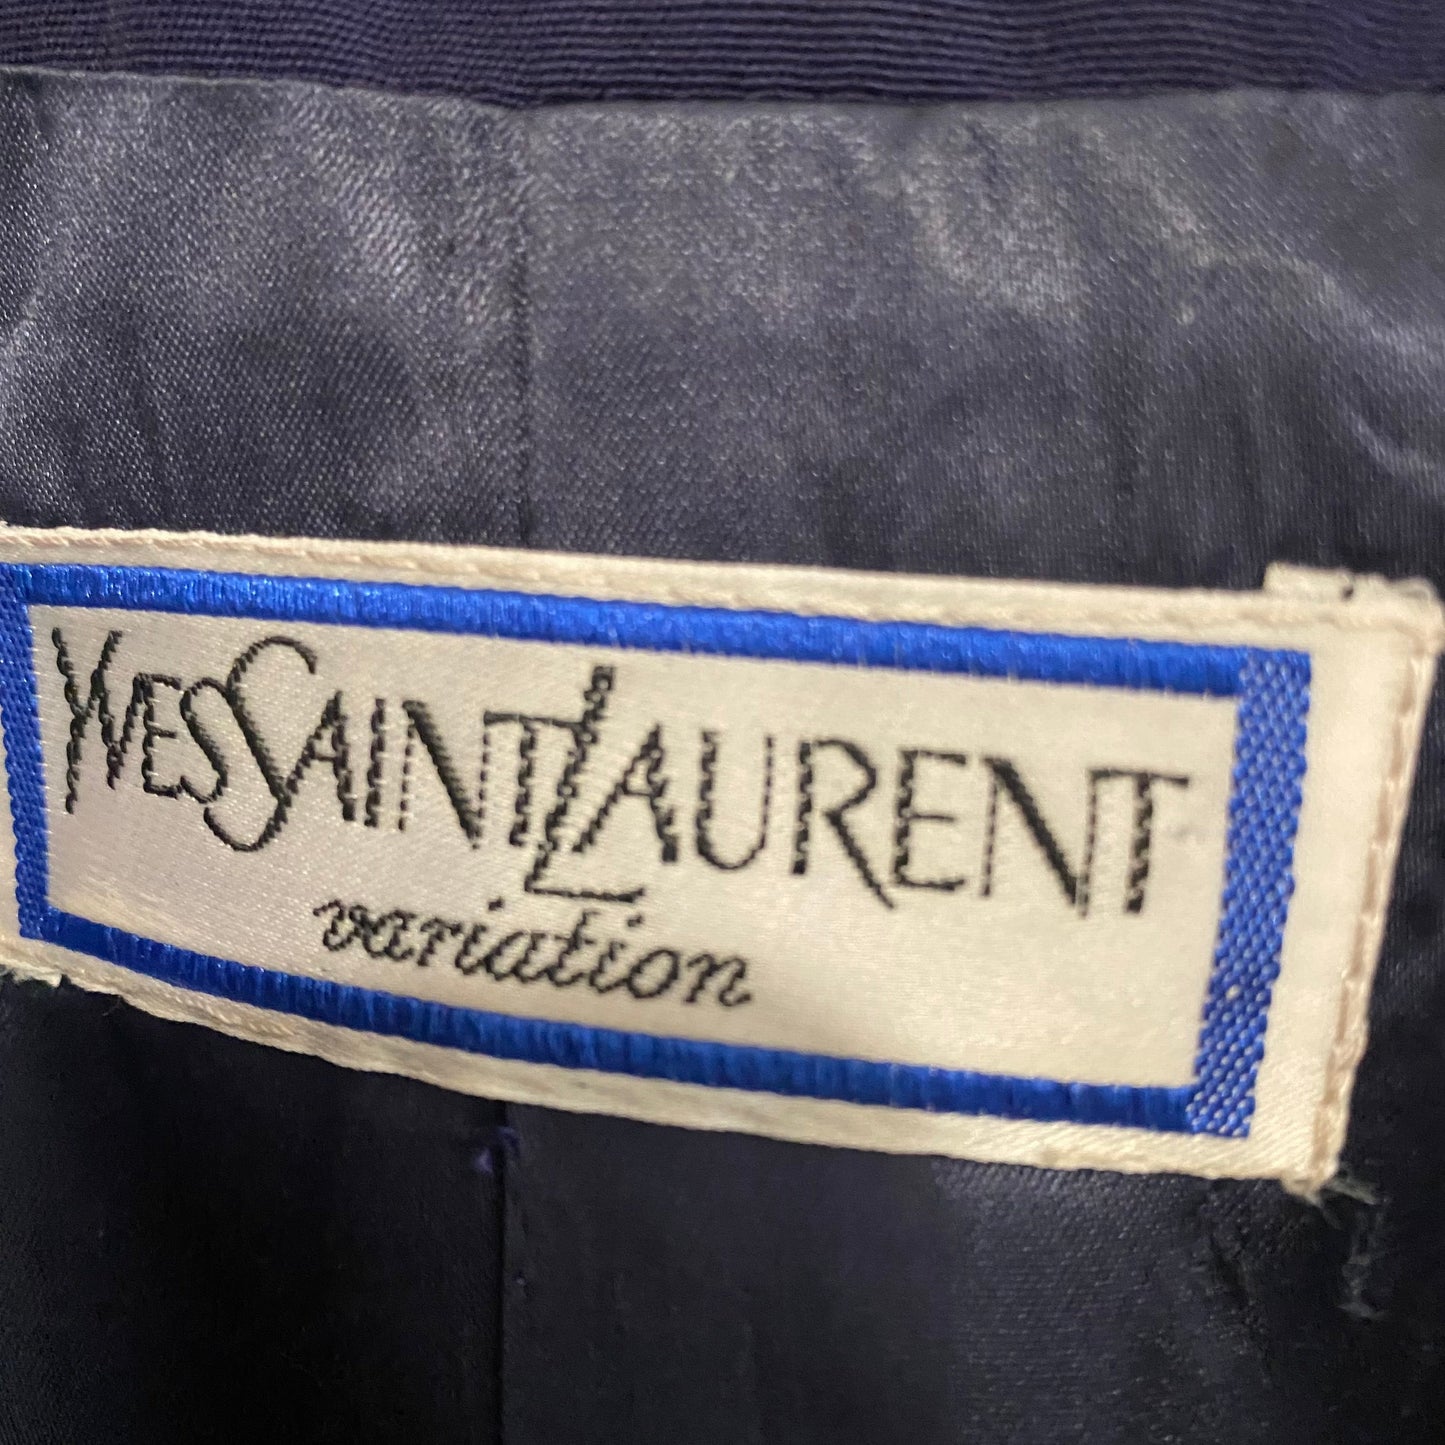 Lysis vintage Saint Laurent Tuxedo blazer in navy blue wool and satin - M - 1980s